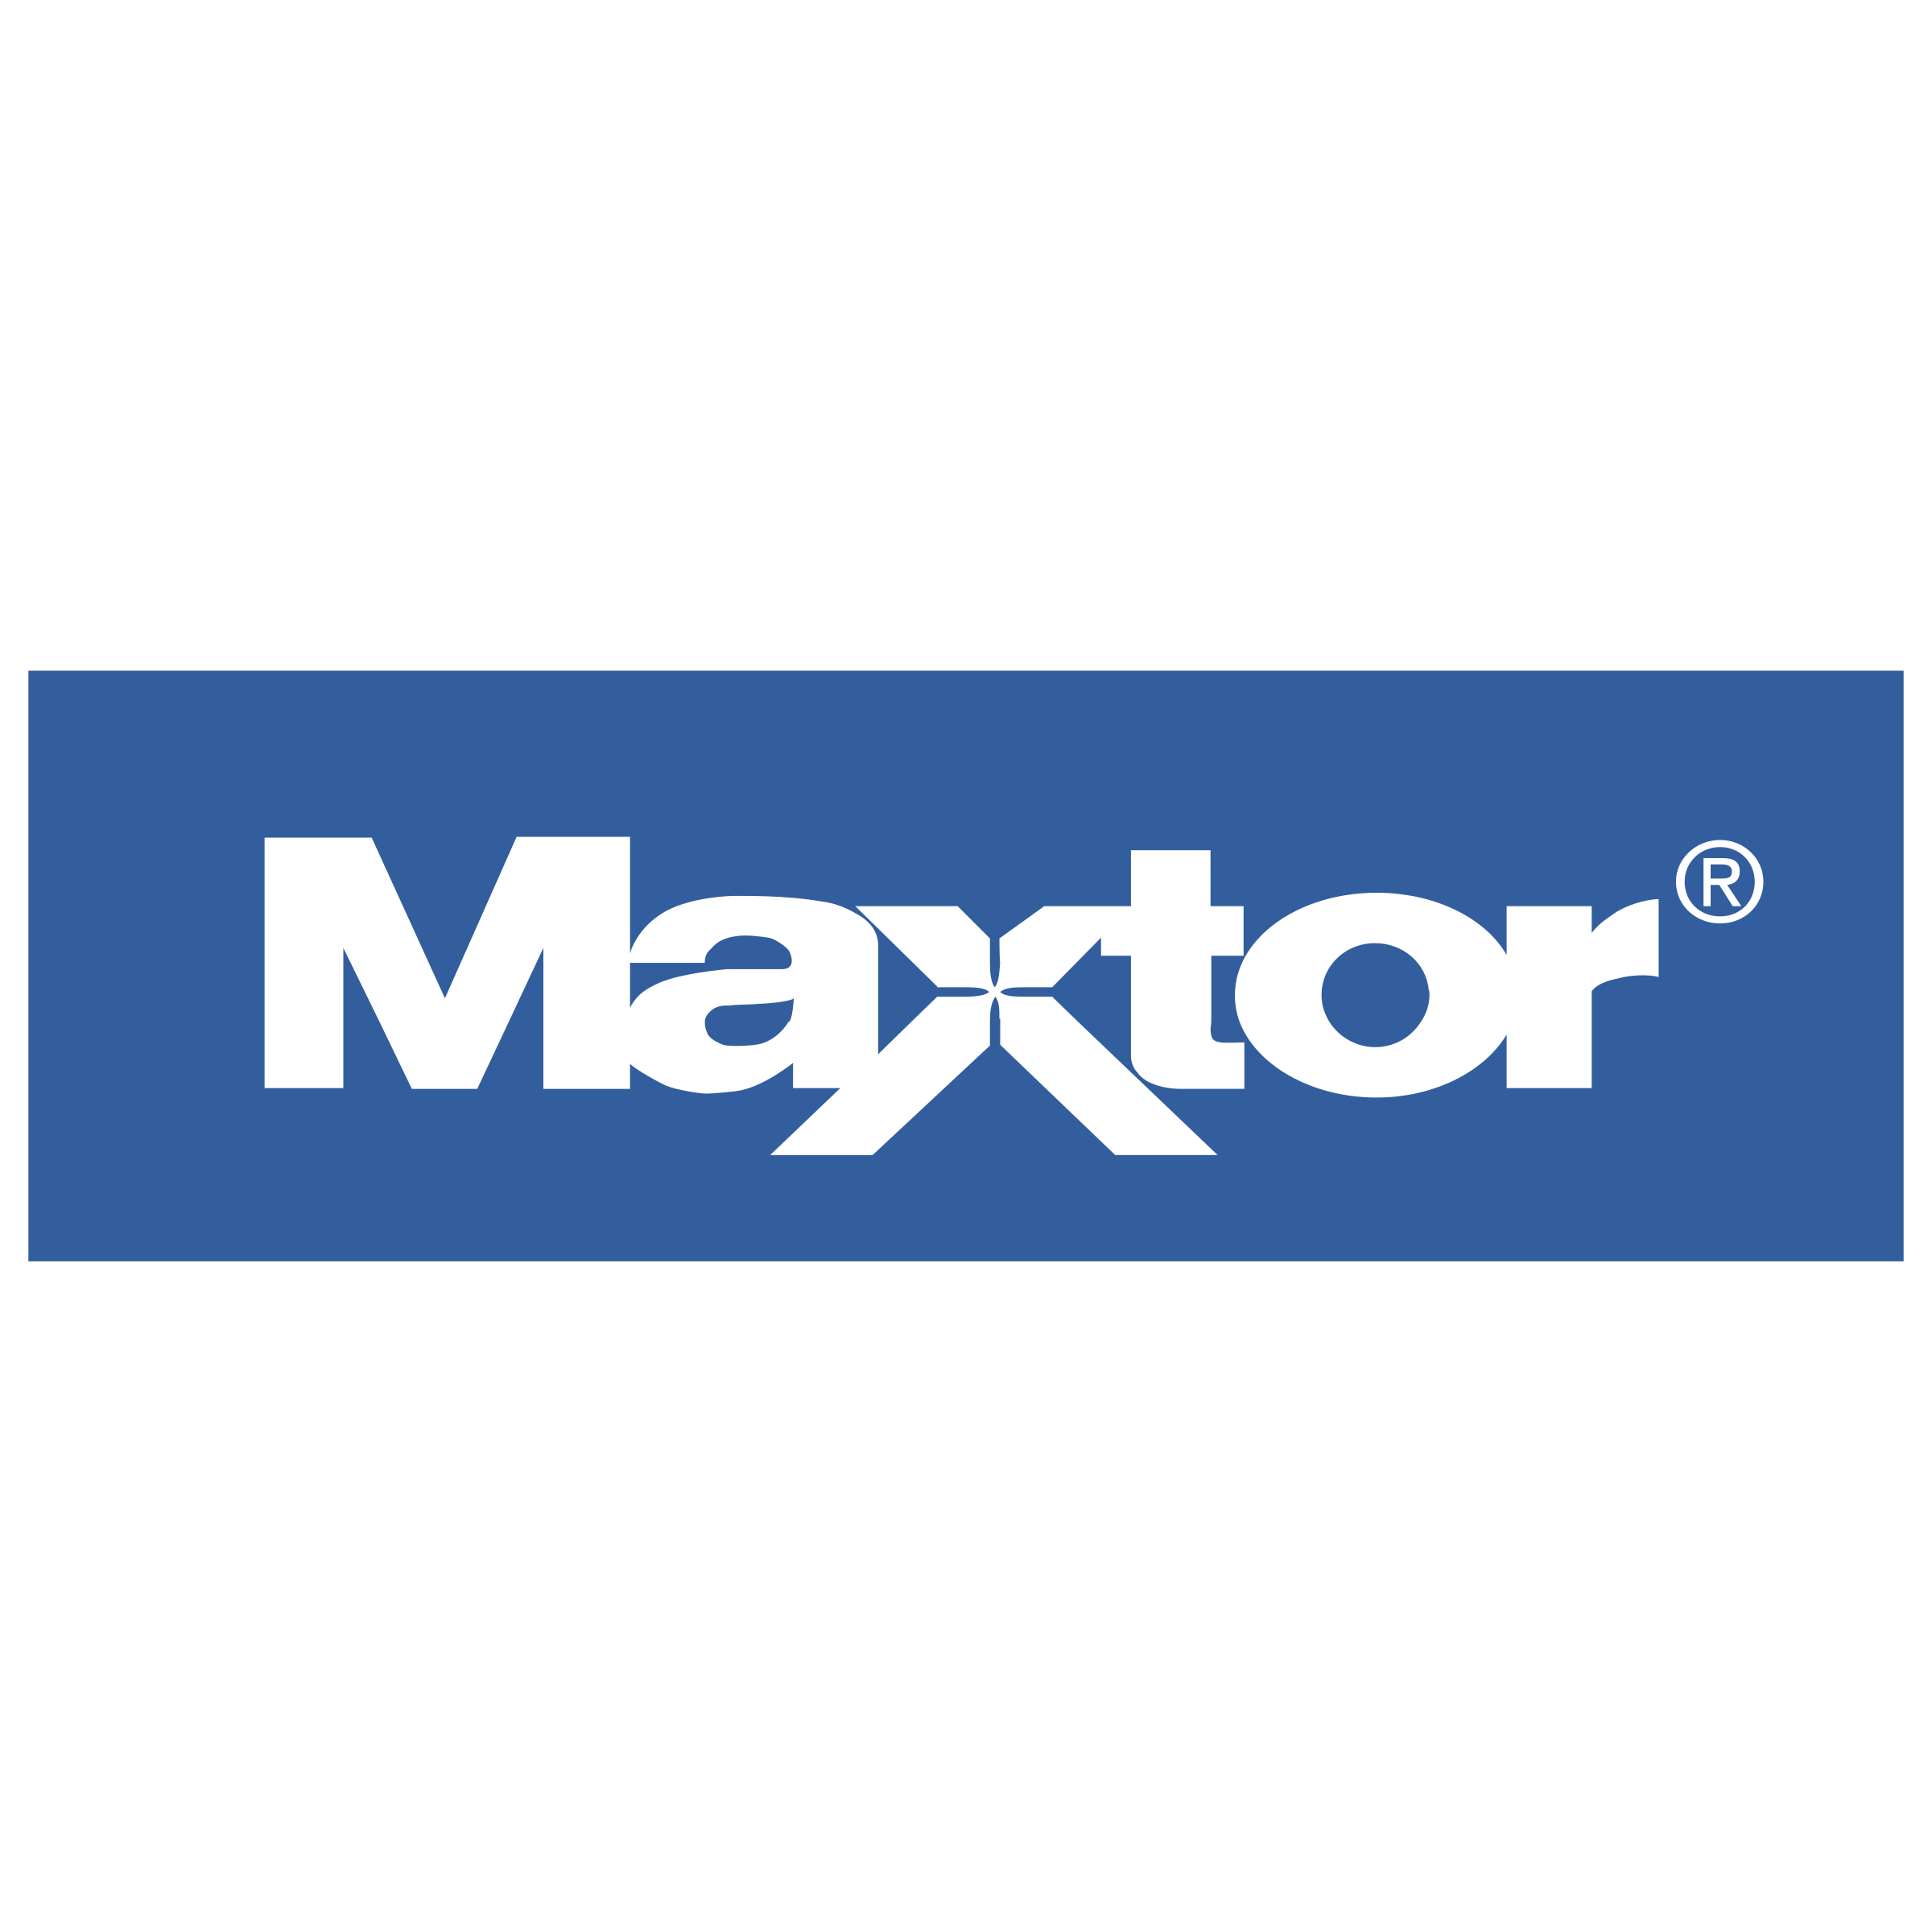 Maxtor Logo - Maxtor Logo PNG Transparent & SVG Vector - Freebie Supply